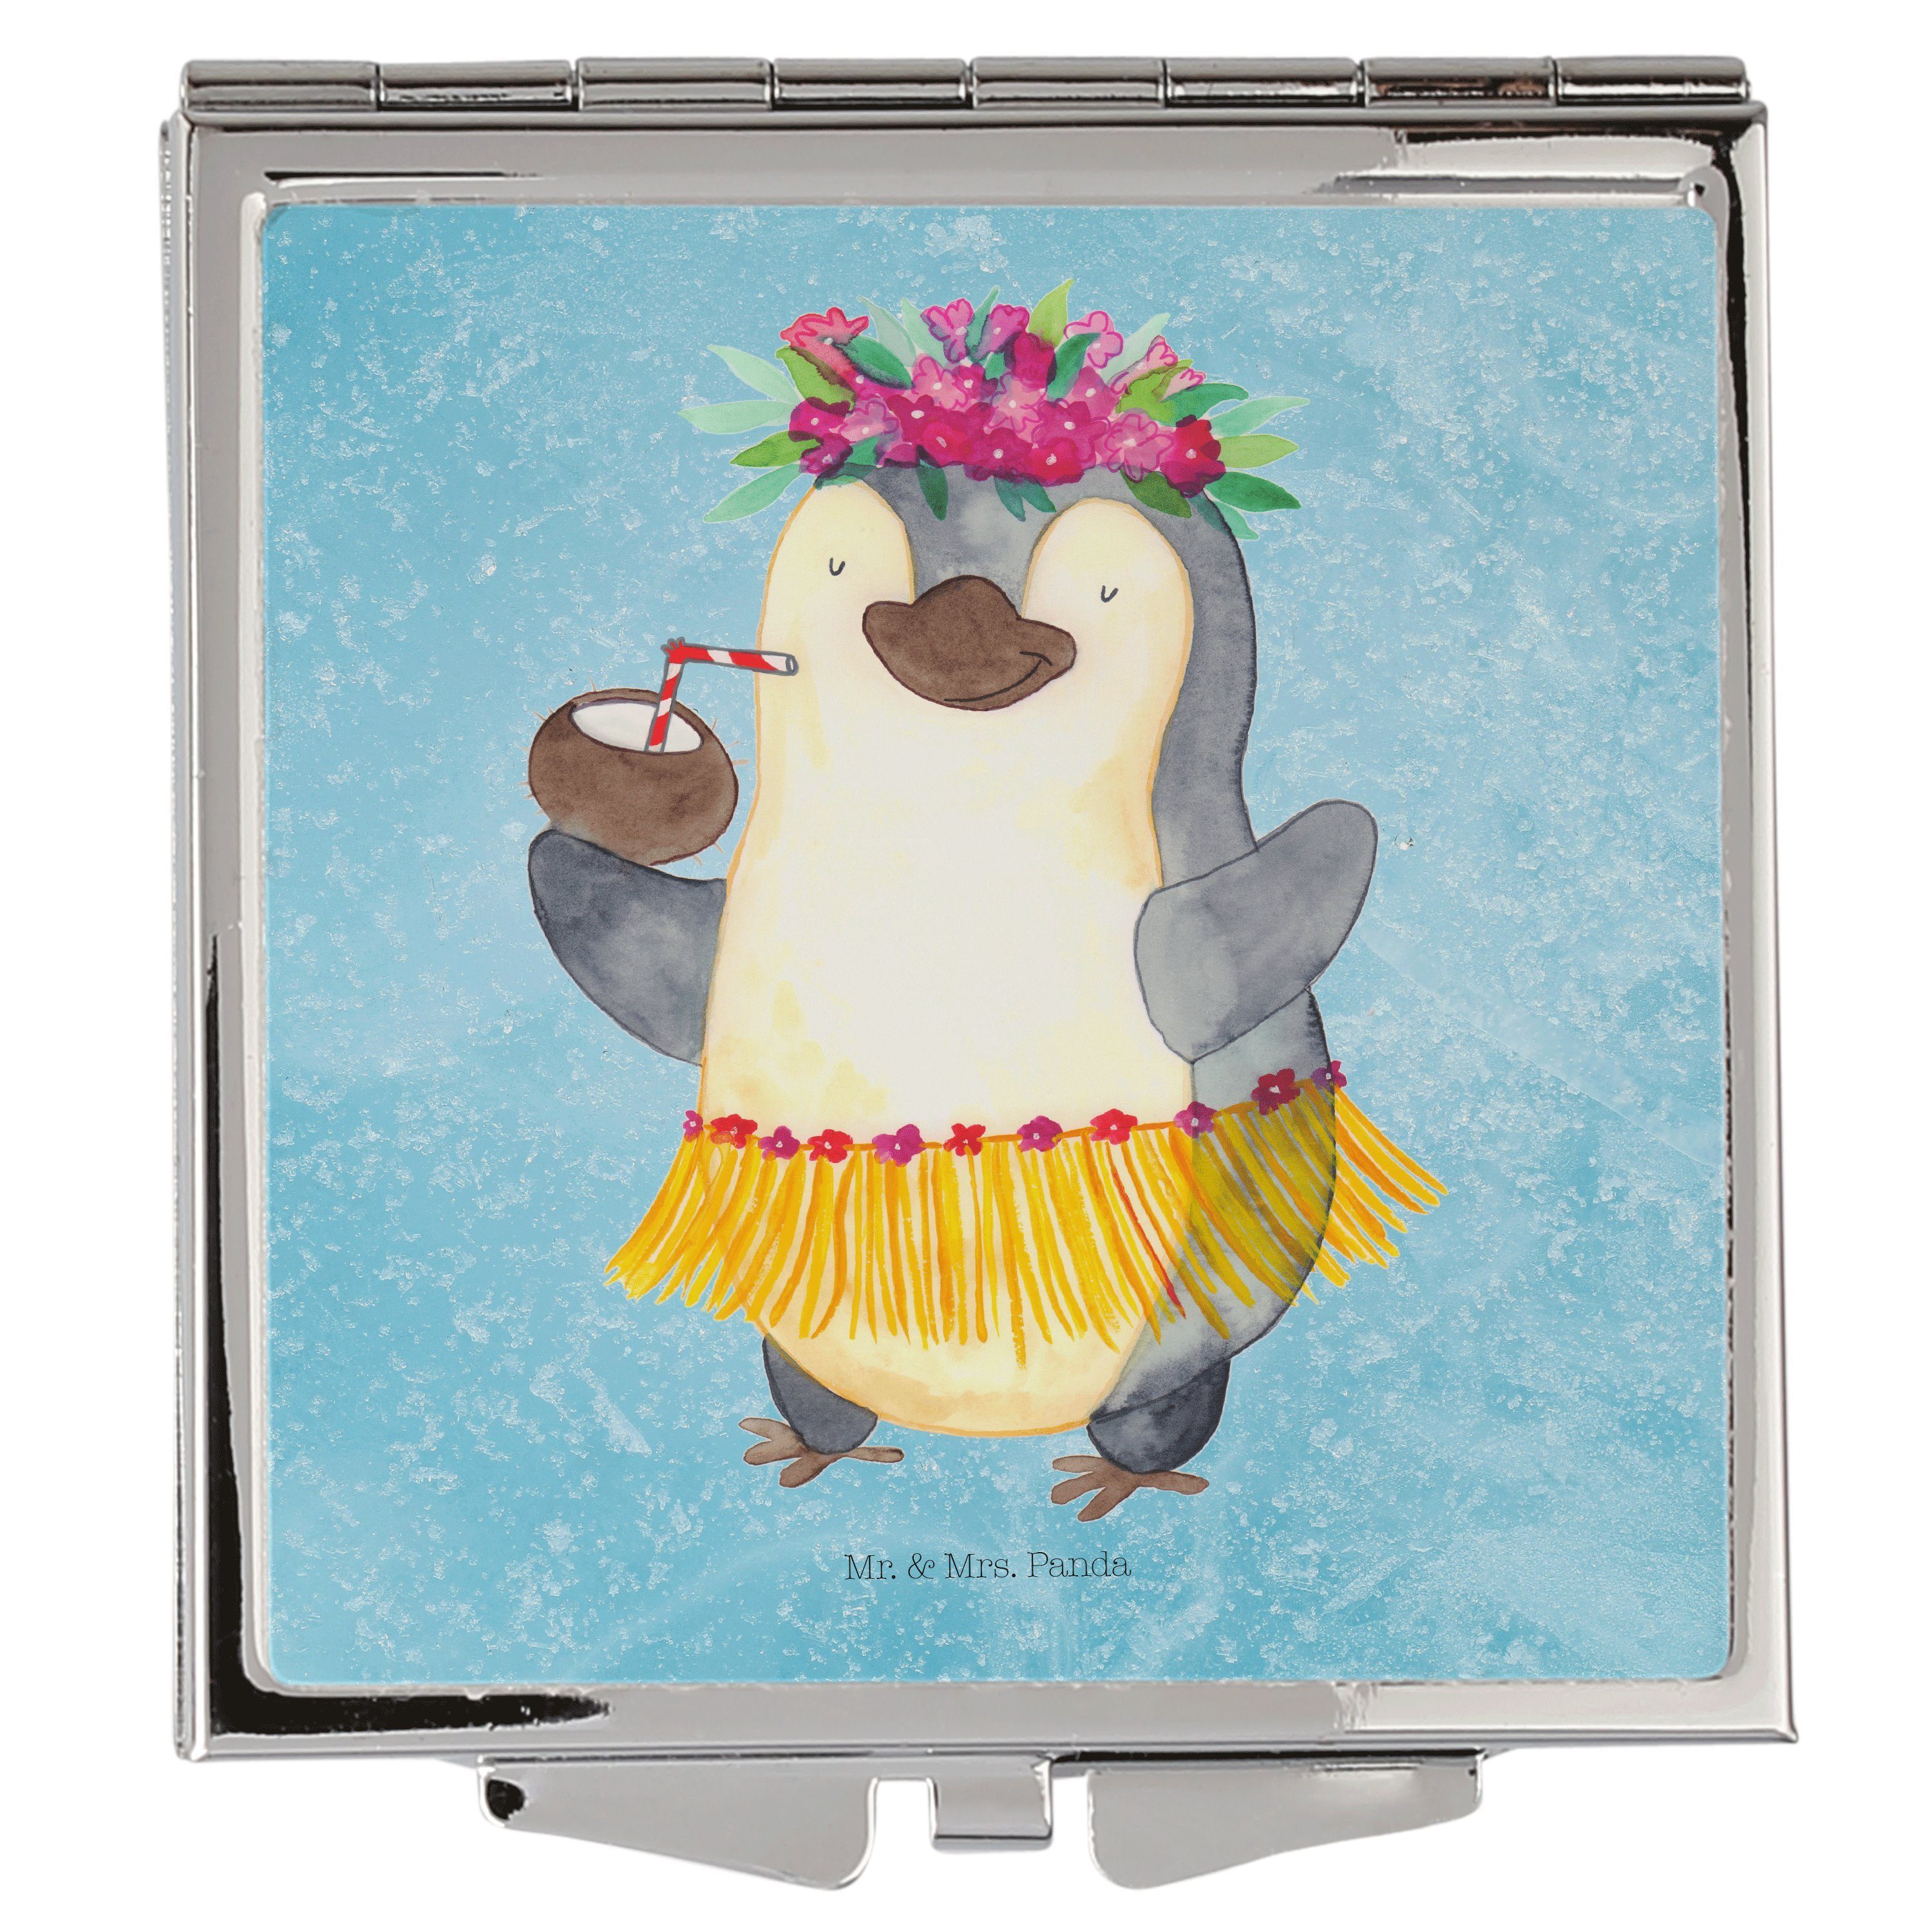 Mr. & Mrs. Panda Kosmetikspiegel Pinguin Kokosnuss - Eisblau - Geschenk, Aloha, erholt, Schminkspiegel (1-St)